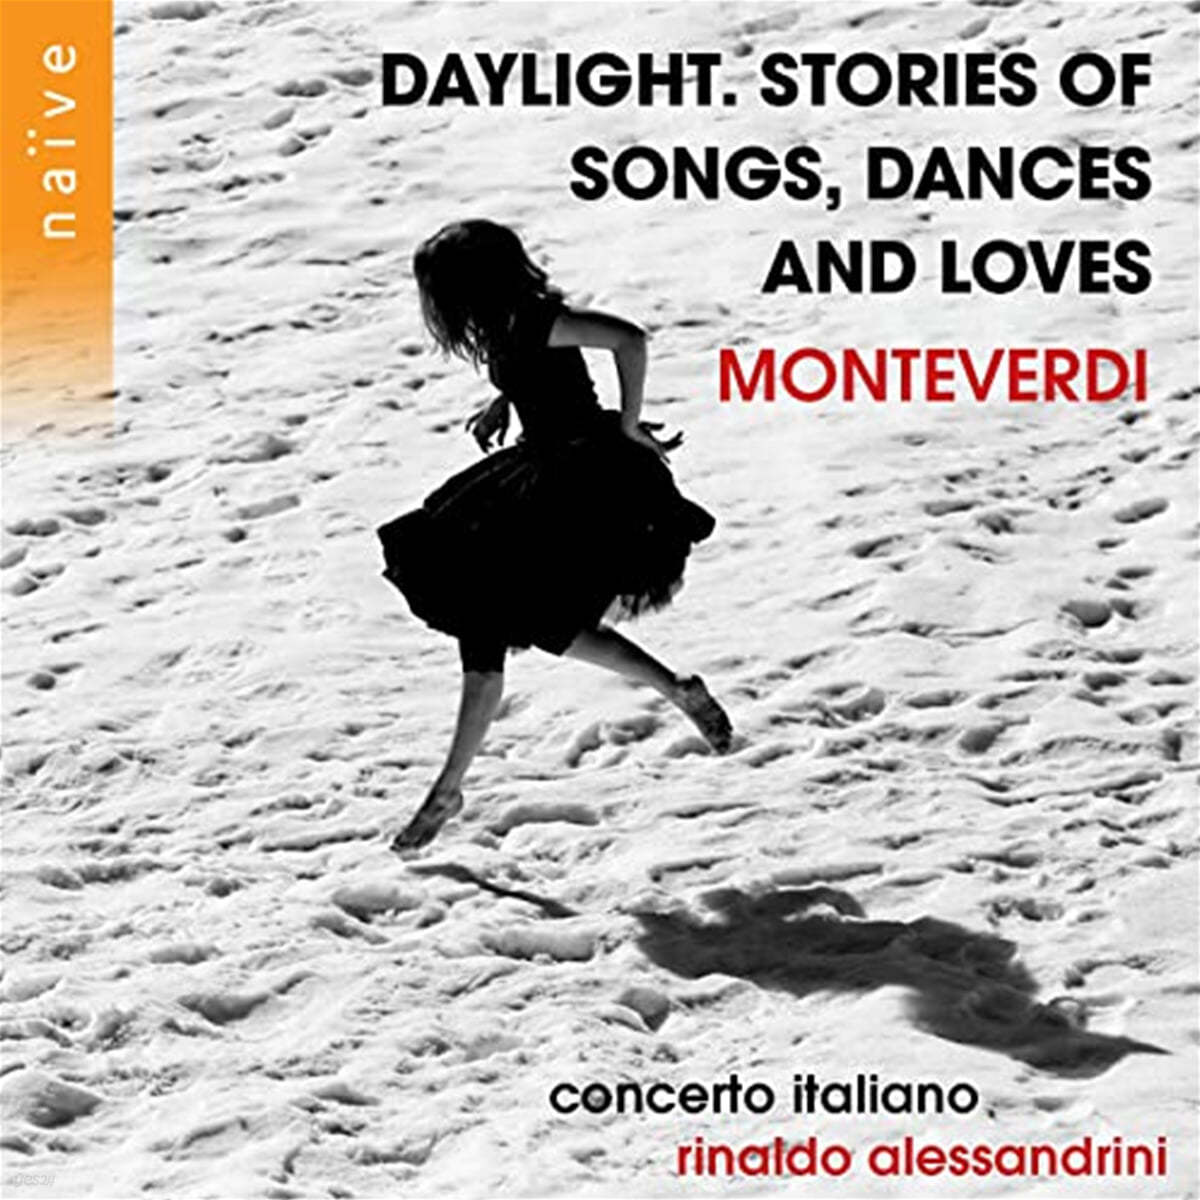 Concerto Italiano 몬테베르디: 태양의 빛. 노래와 춤 그리고 사랑 이야기 - 콘체트로 이탈리아노 (Monteverdi: Daylight. Stories of Songs, Dances and Loves) 